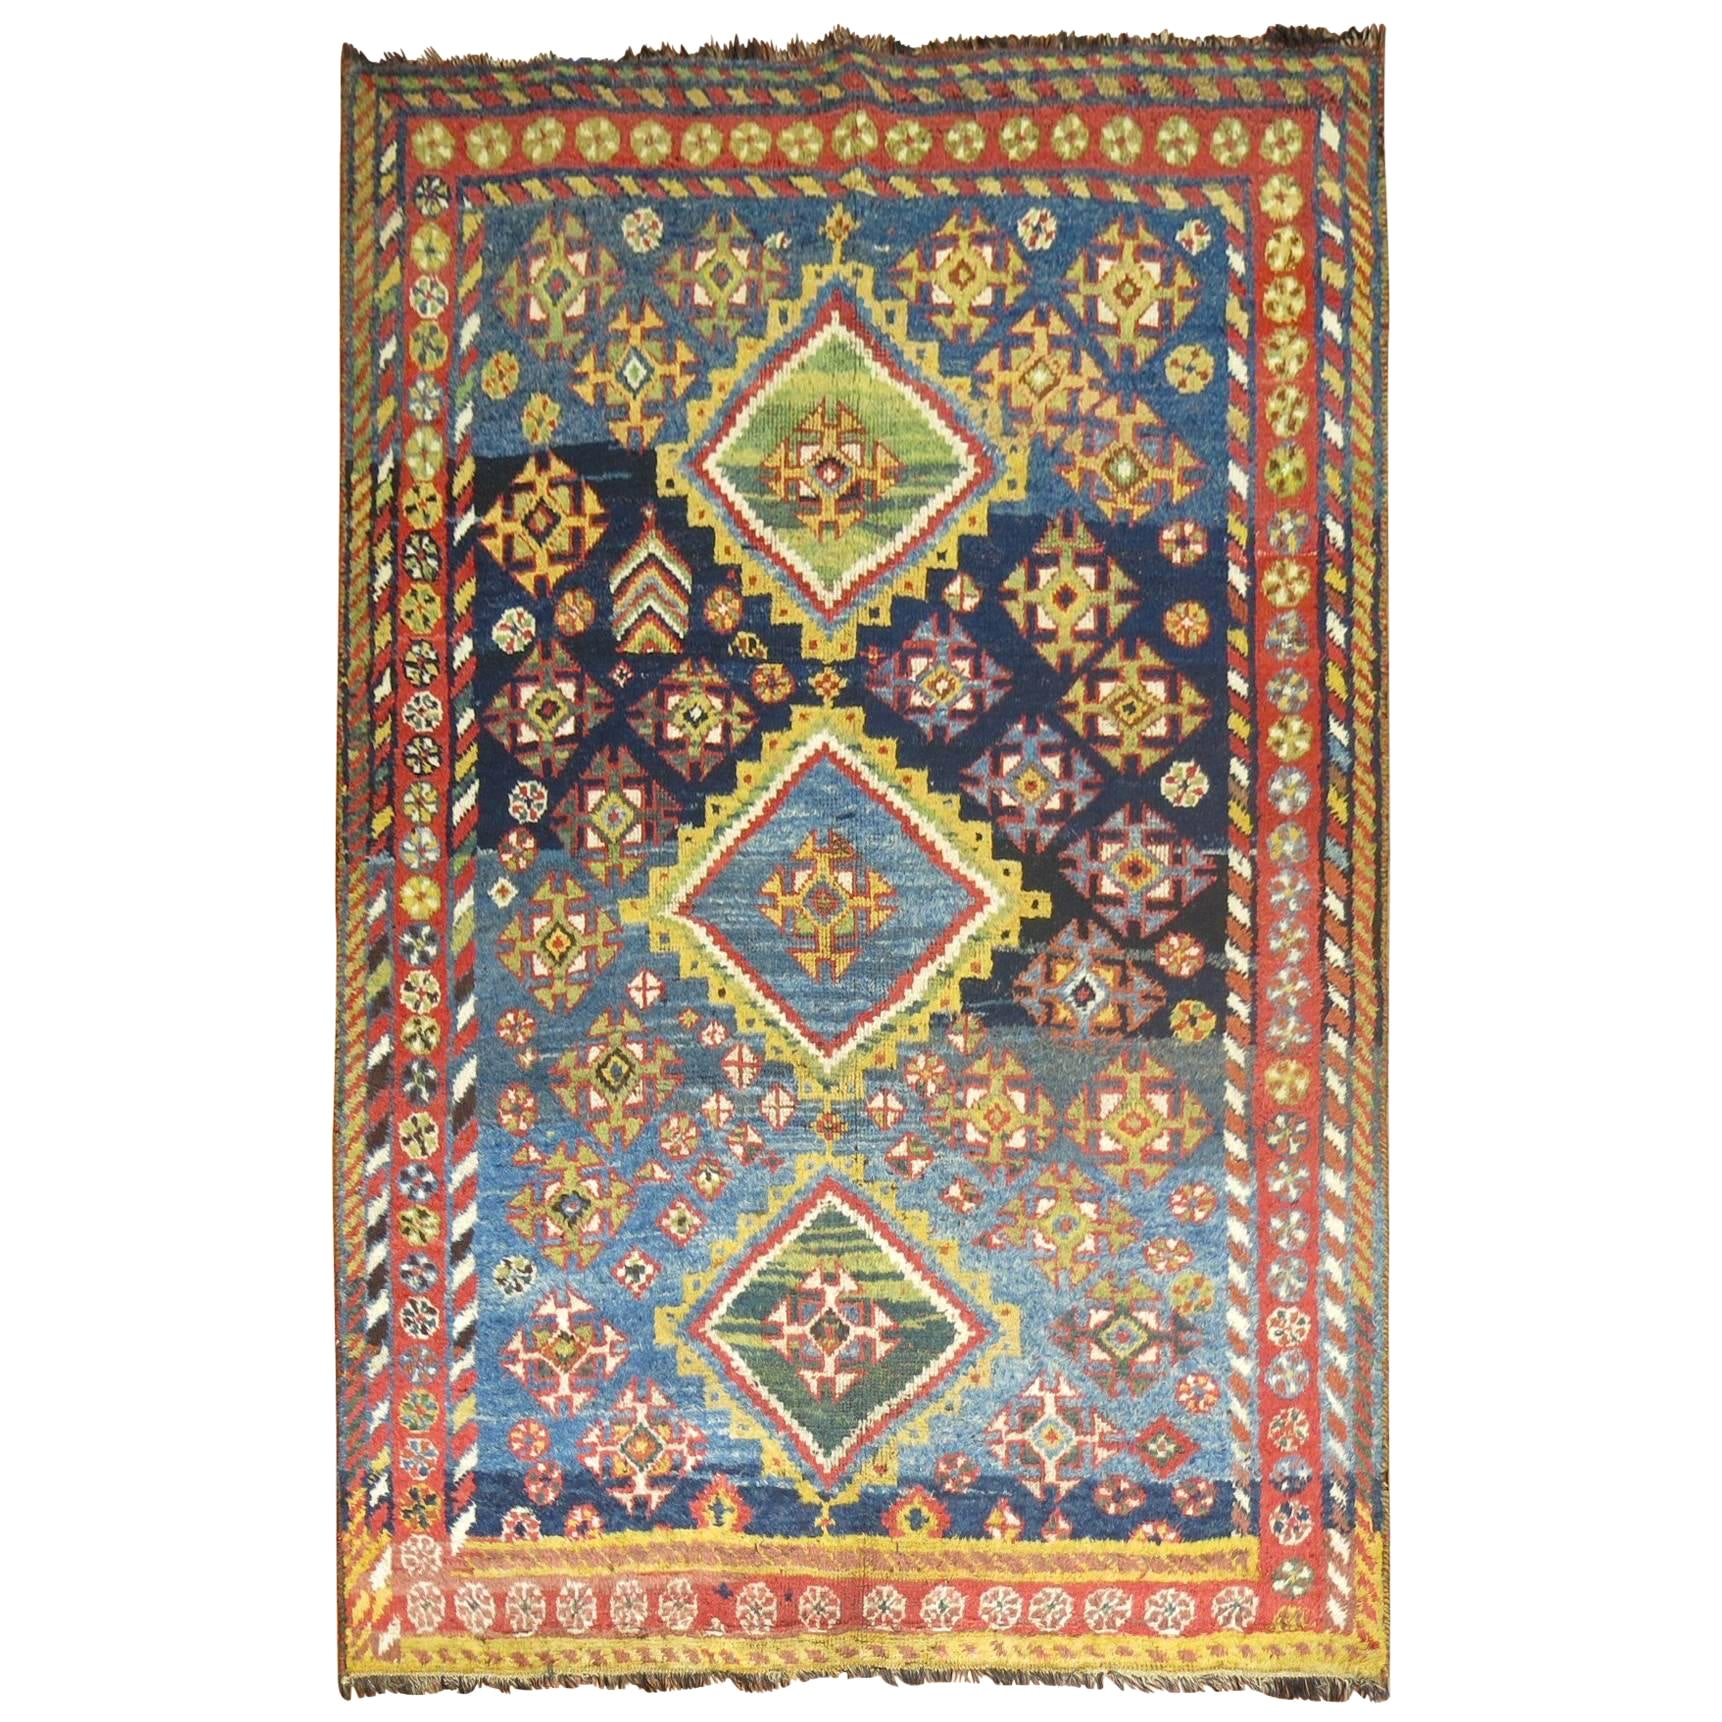 Antique Colorful Persian Gabbeh Rug